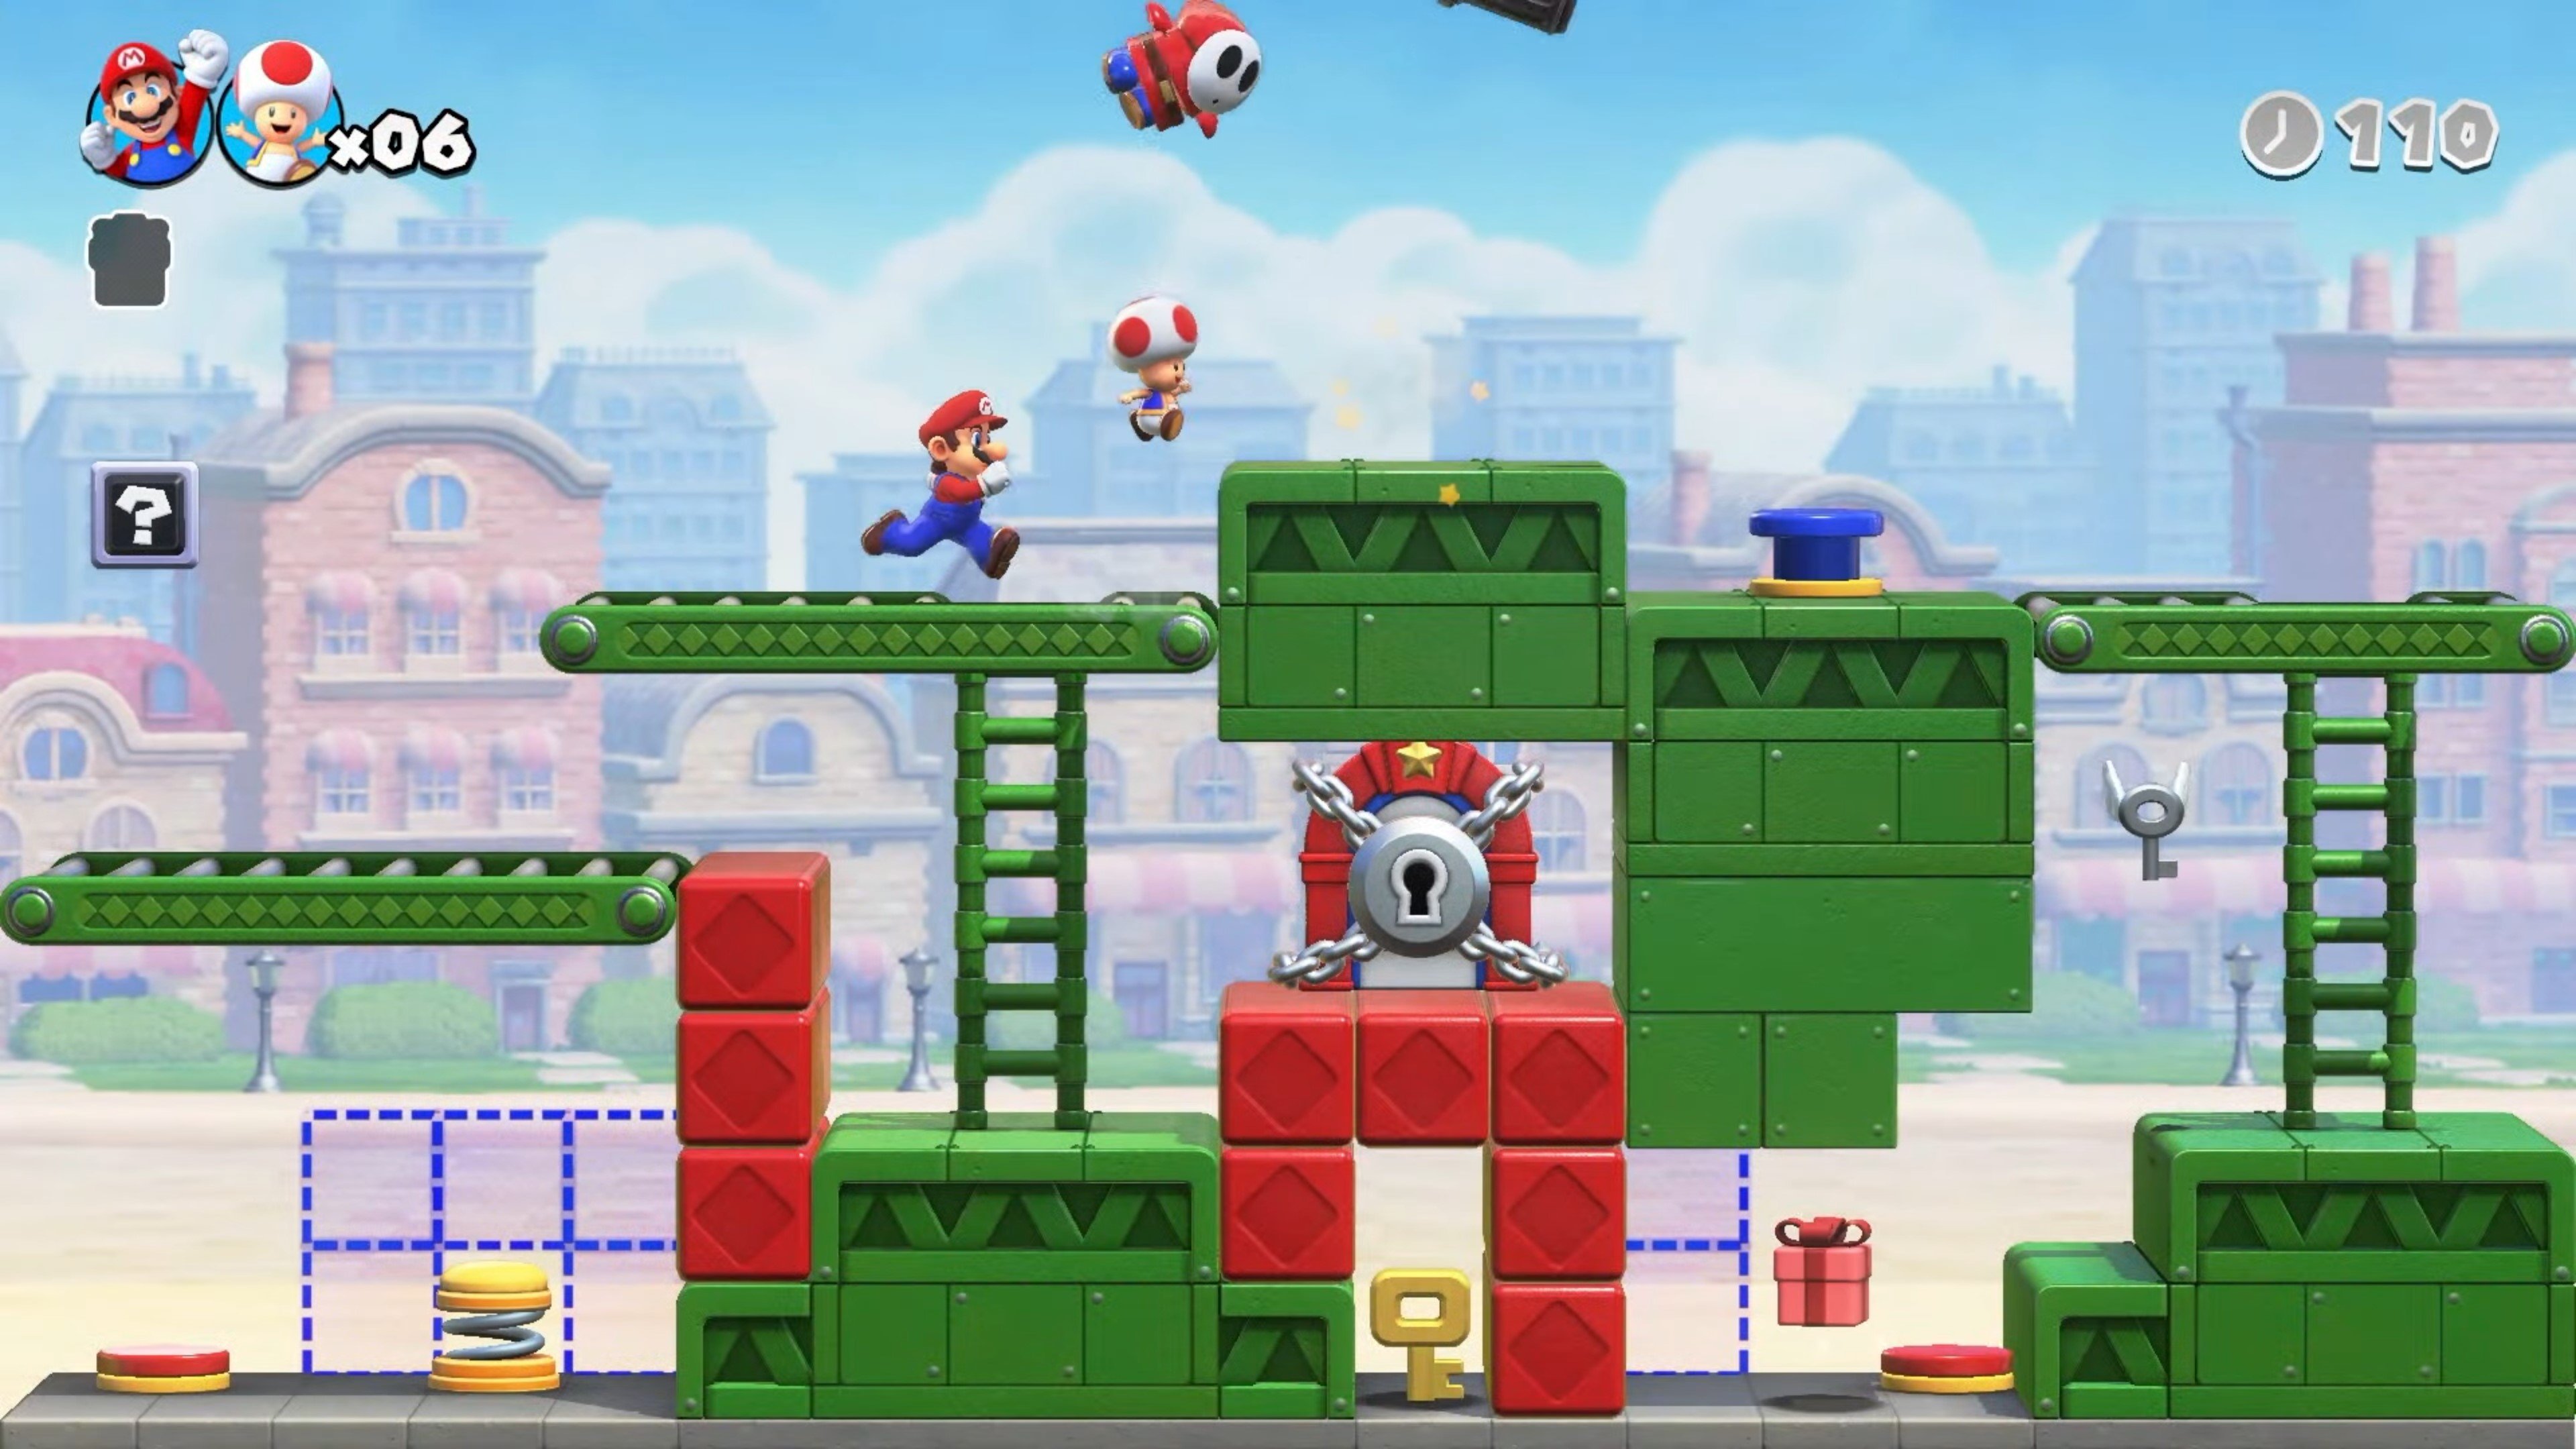 Nintendo shows off Mario vs. Donkey Kong's new co-op mode